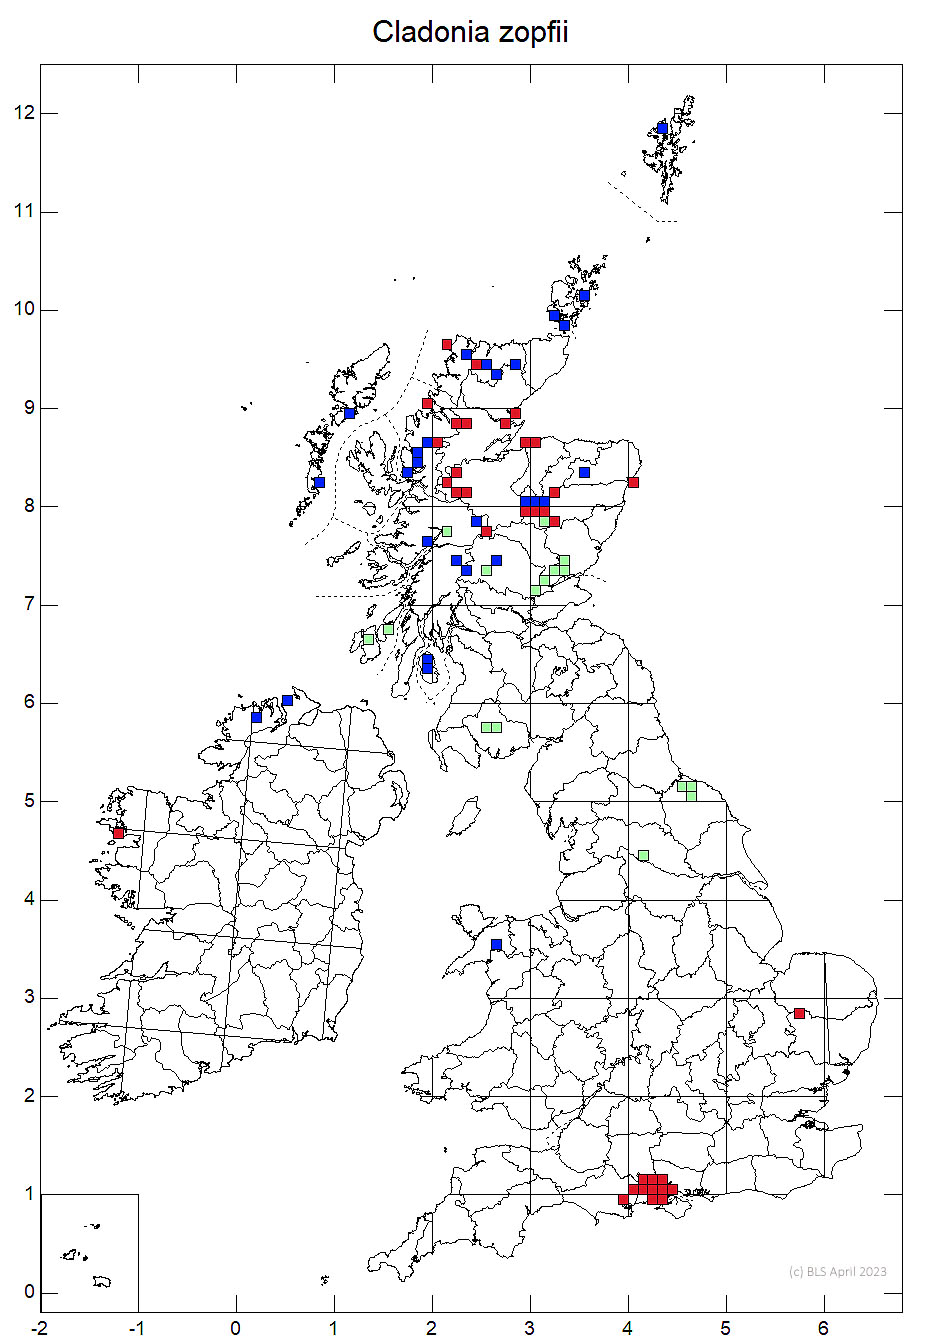 Cladonia zopfii 10km sq distribution map